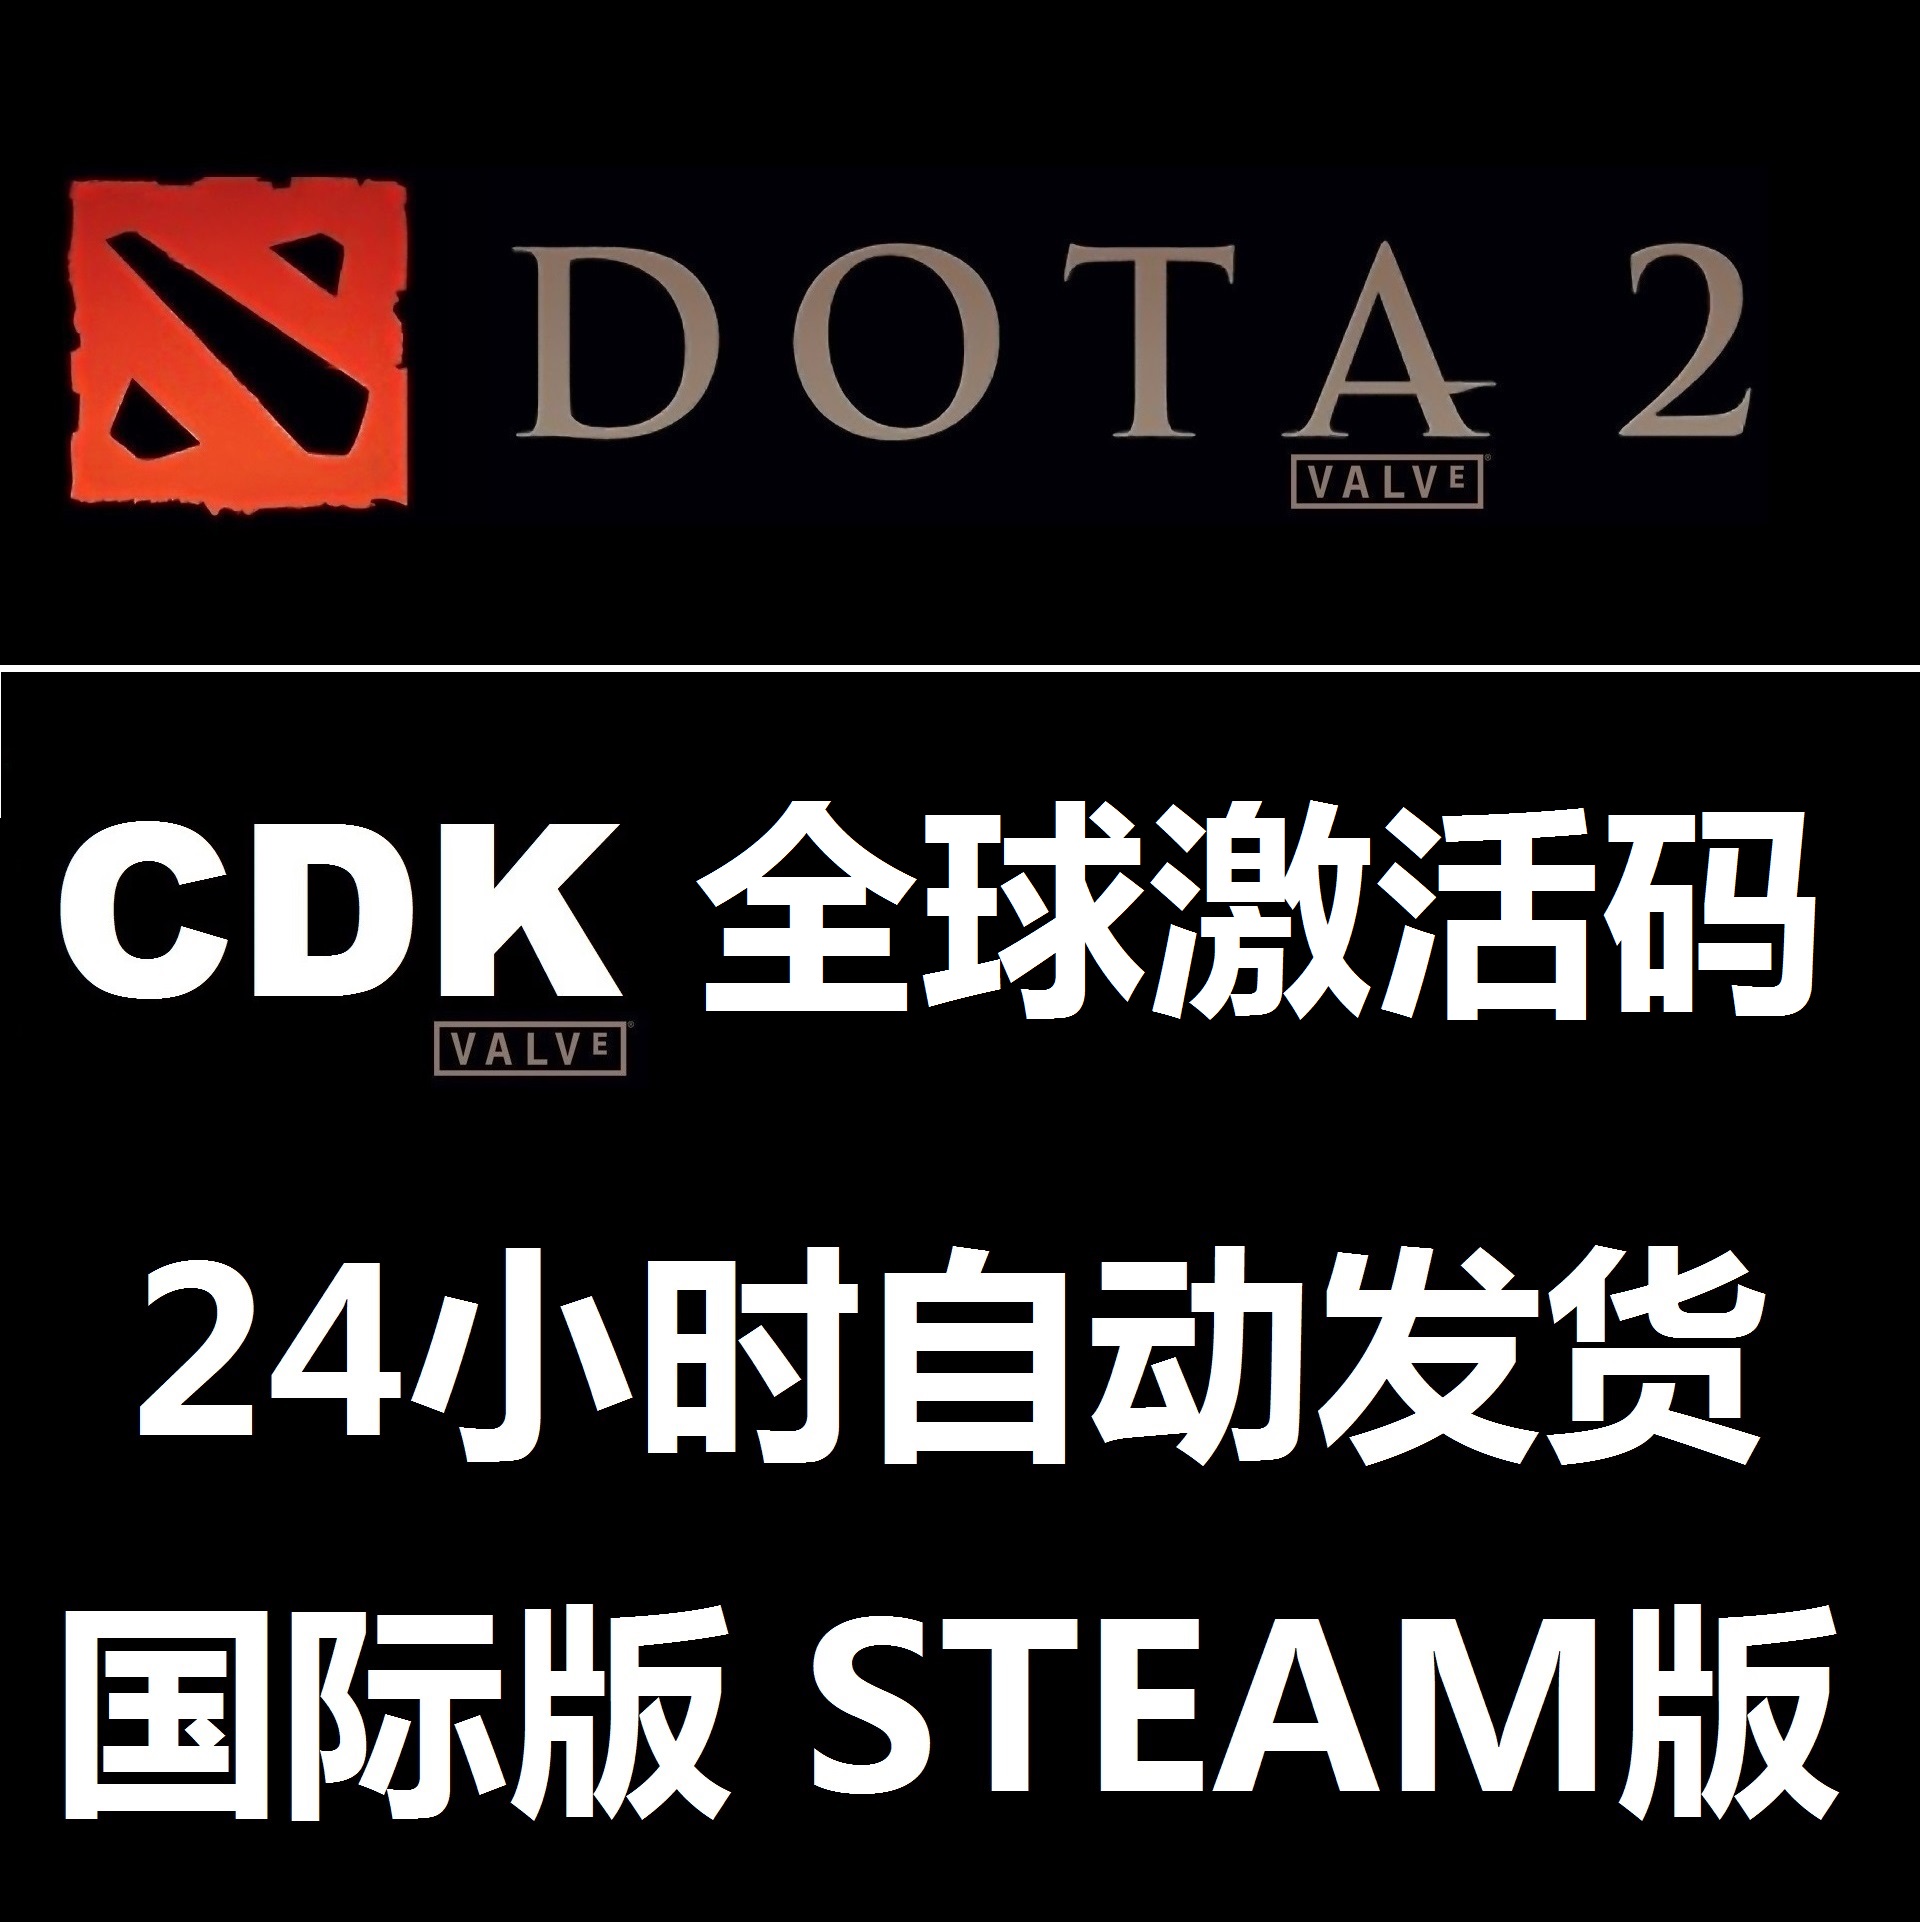 Dota2 官方国际版 全球激活码 cdk steam版|一